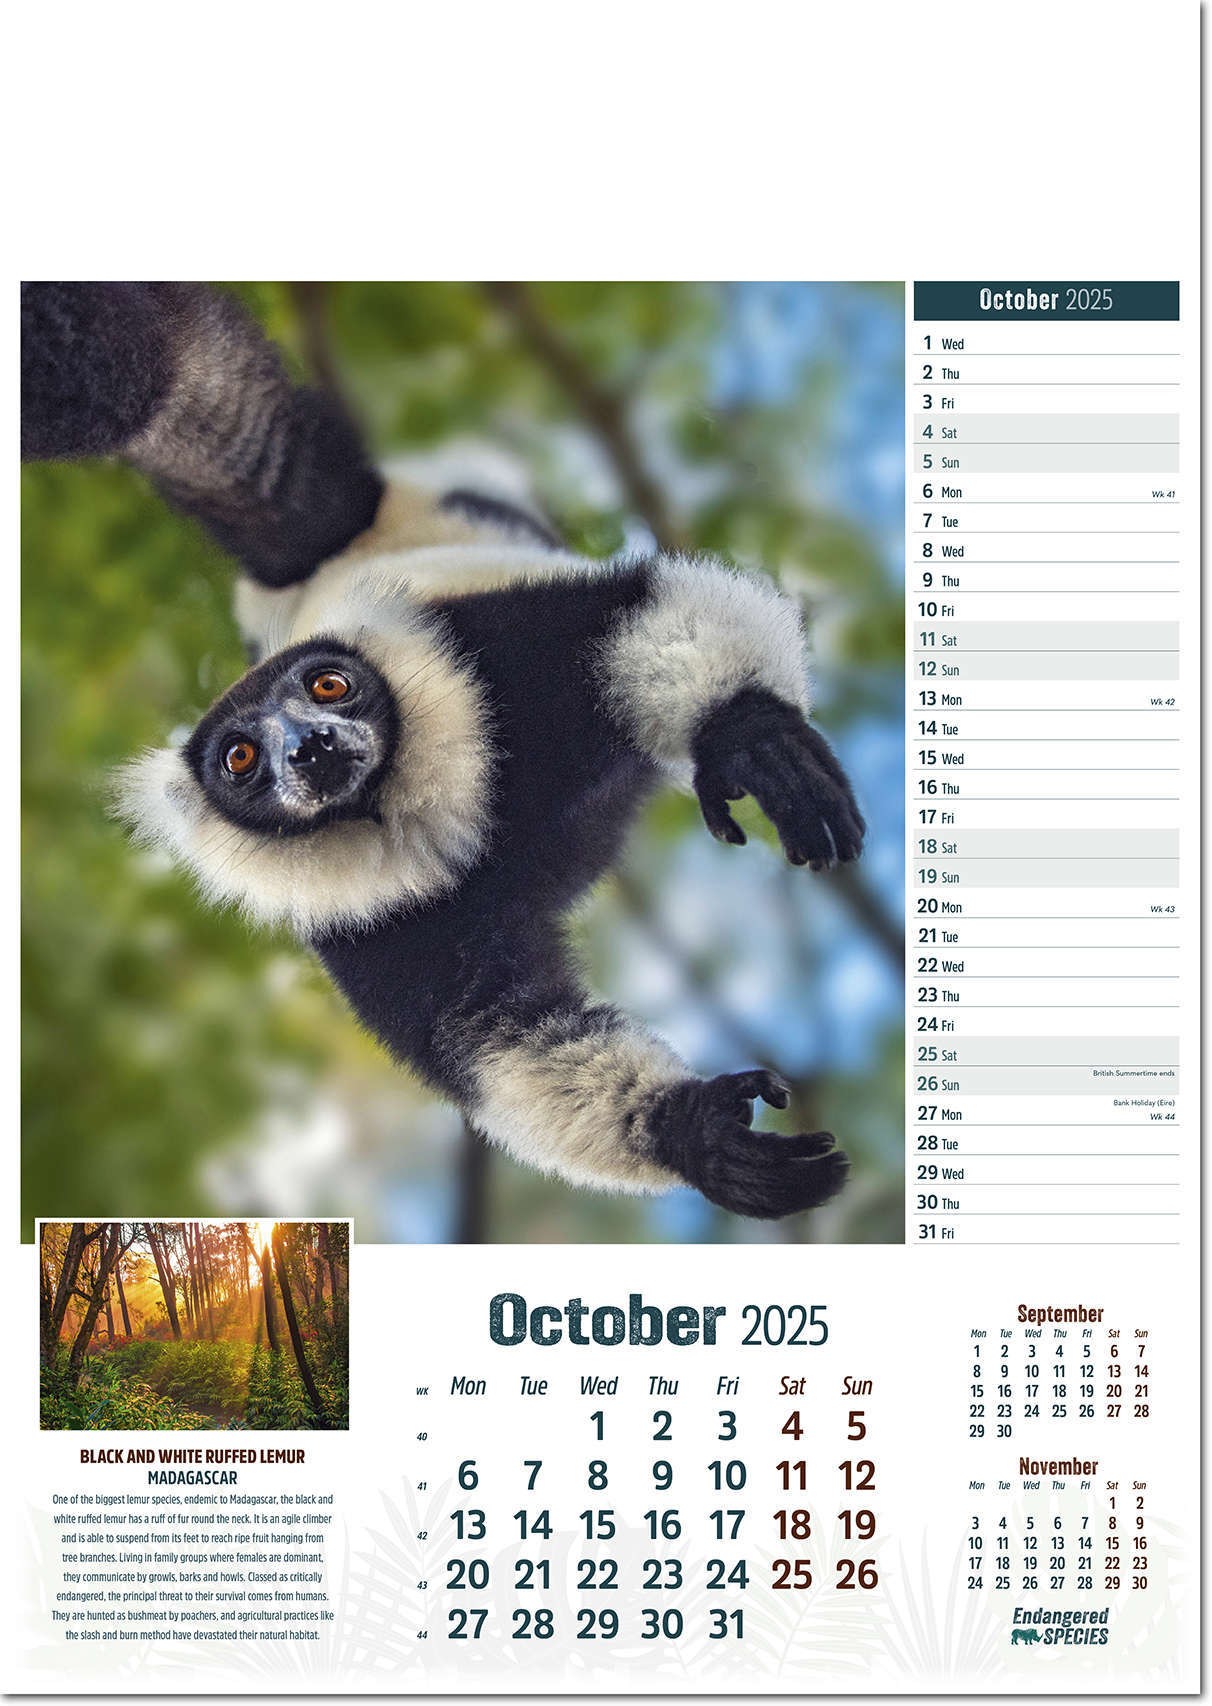 Endangered Species Calendar